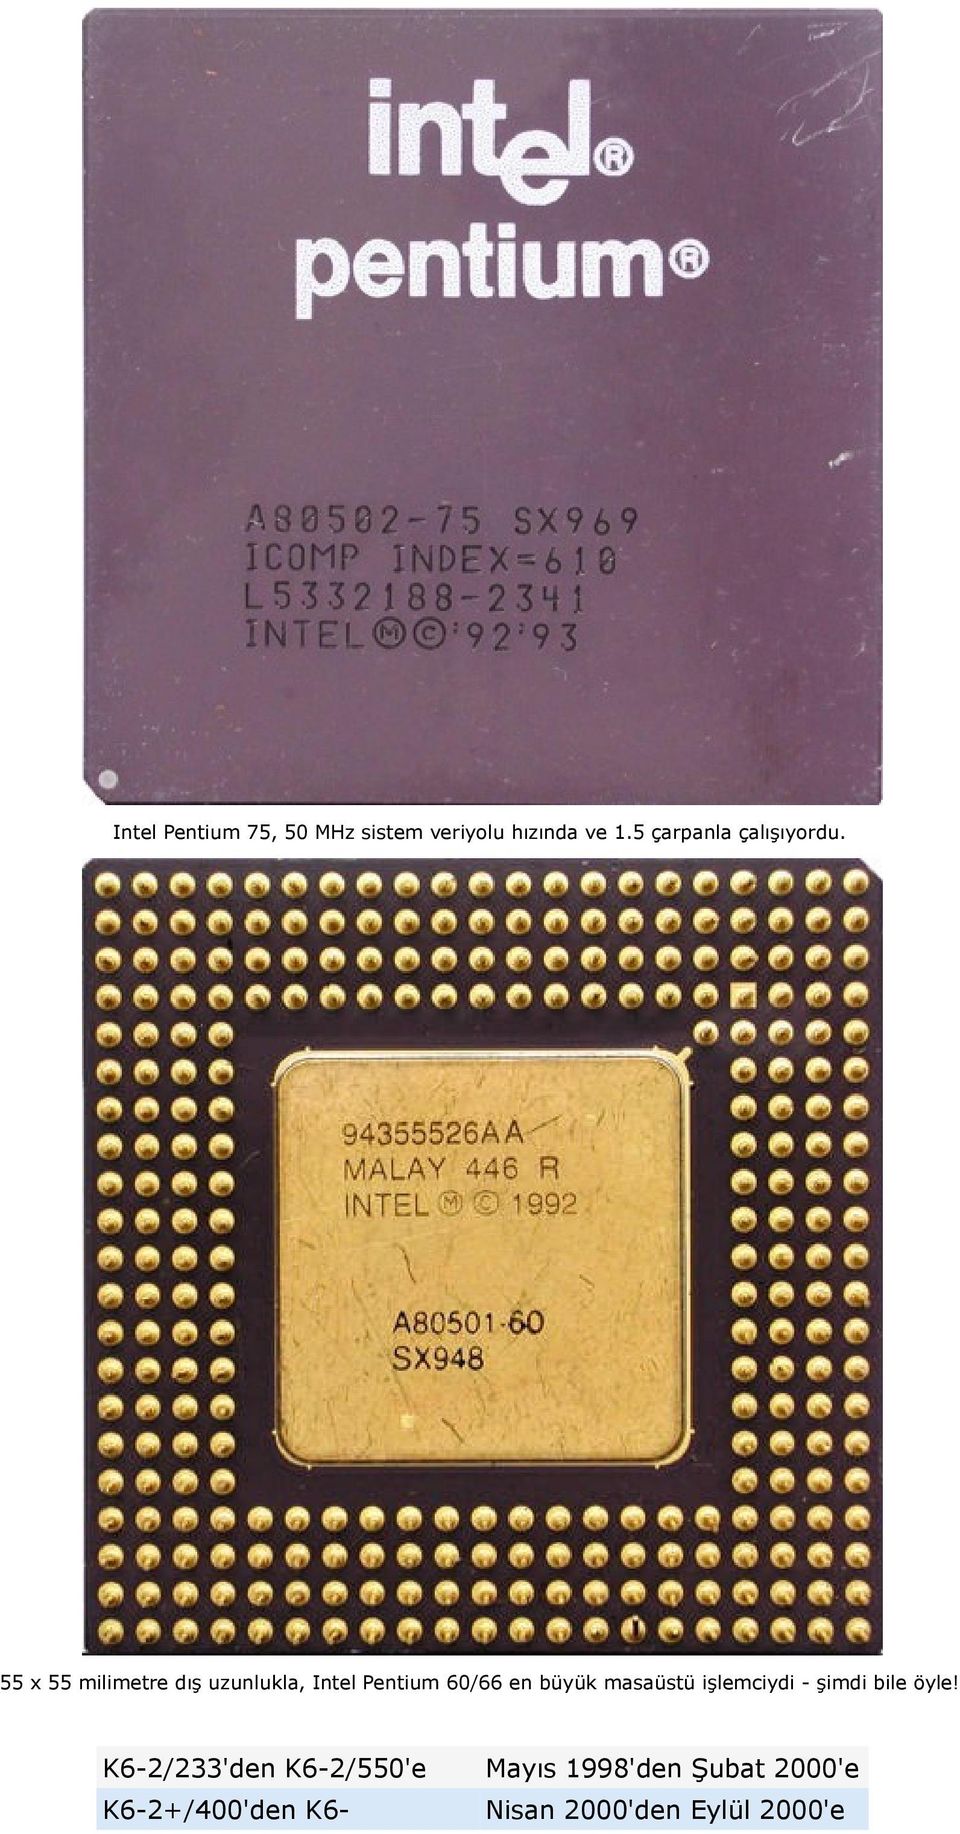 55 x 55 milimetre dış uzunlukla, Intel Pentium 60/66 en büyük